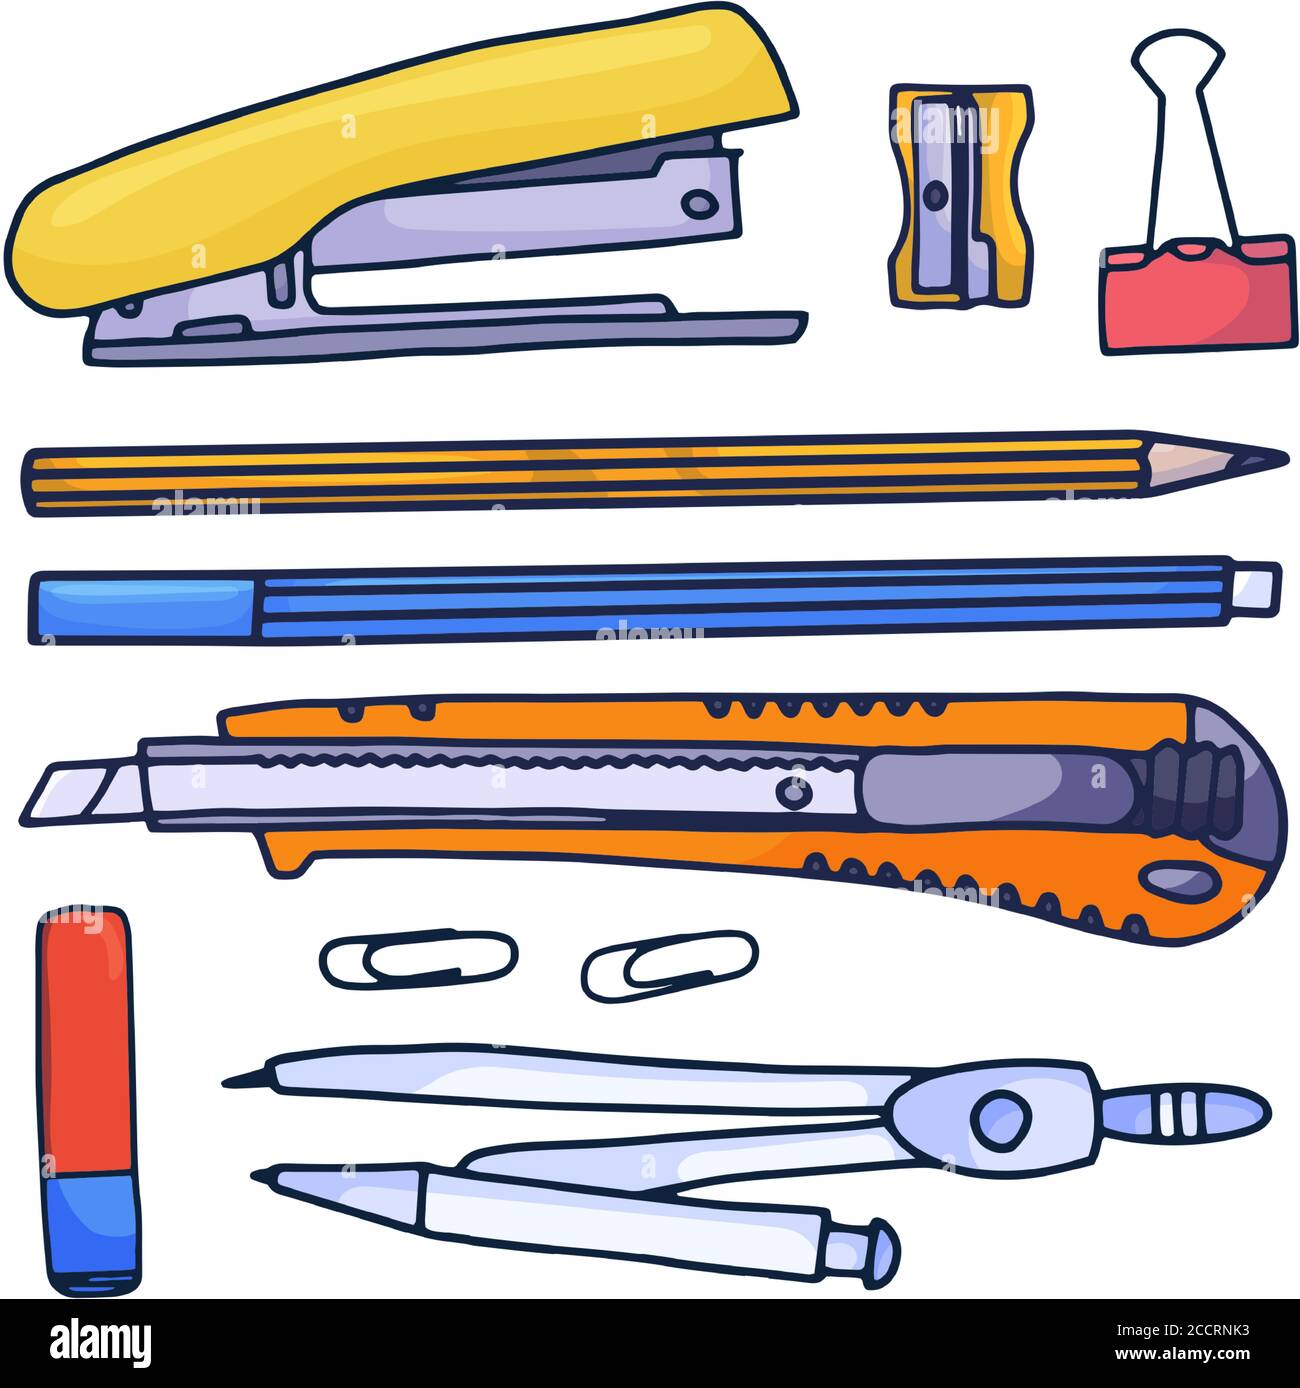 Art supplies set. Hand-drawn cartoon collection of art tools